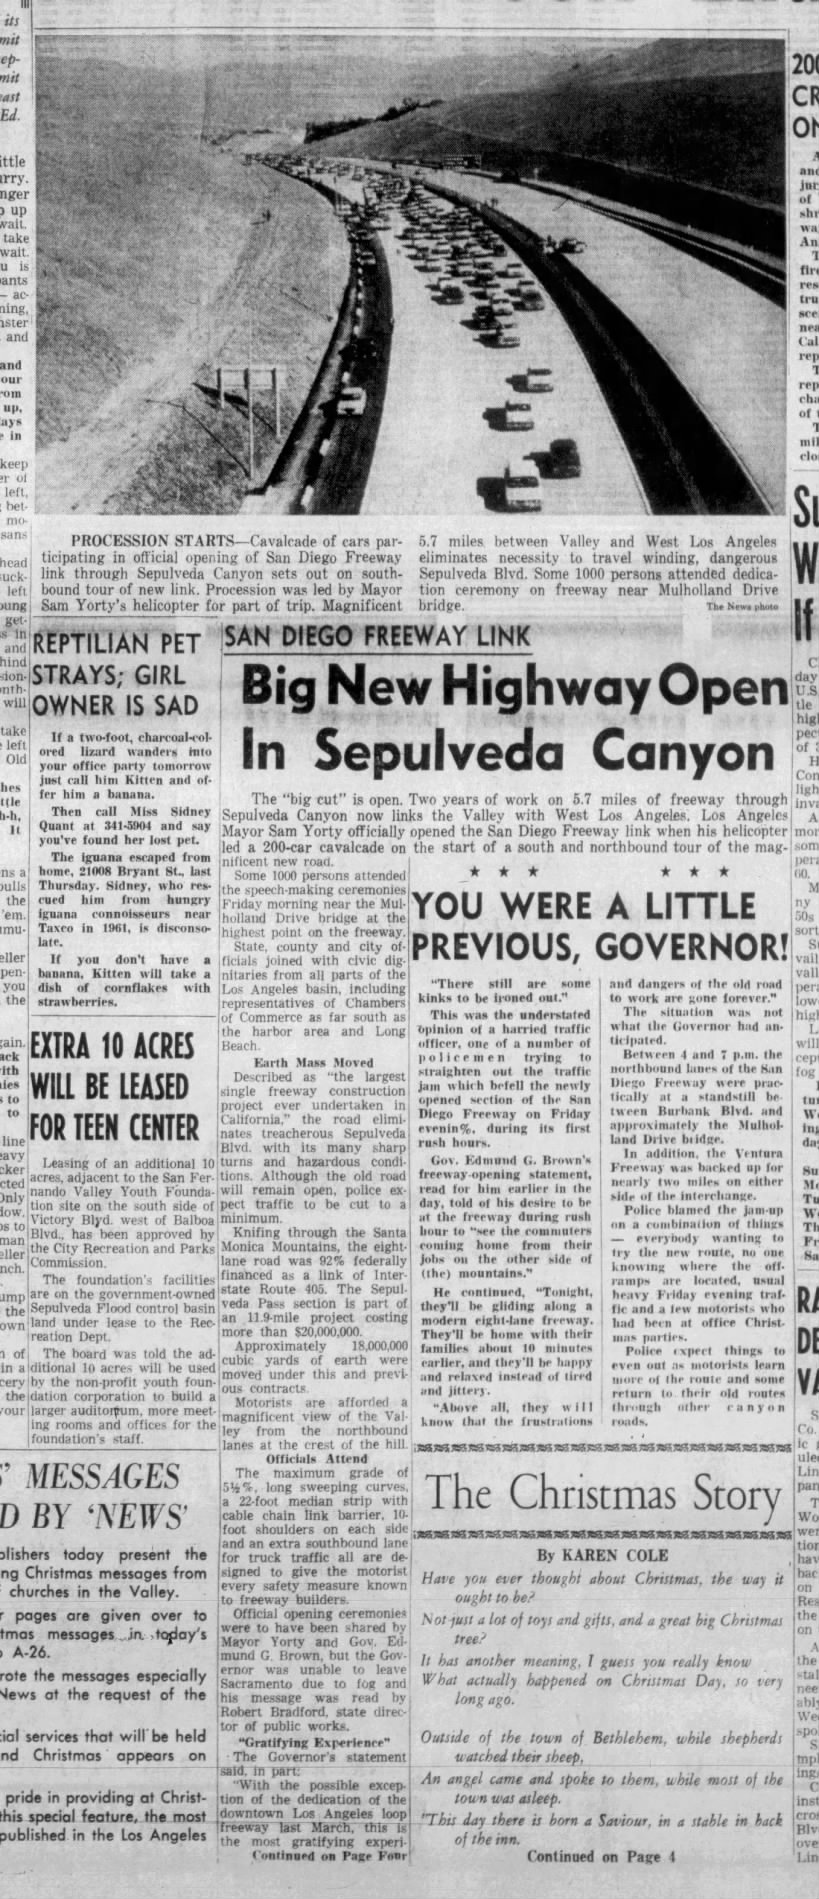 Big New Highway Open In Sepulveda Canyon